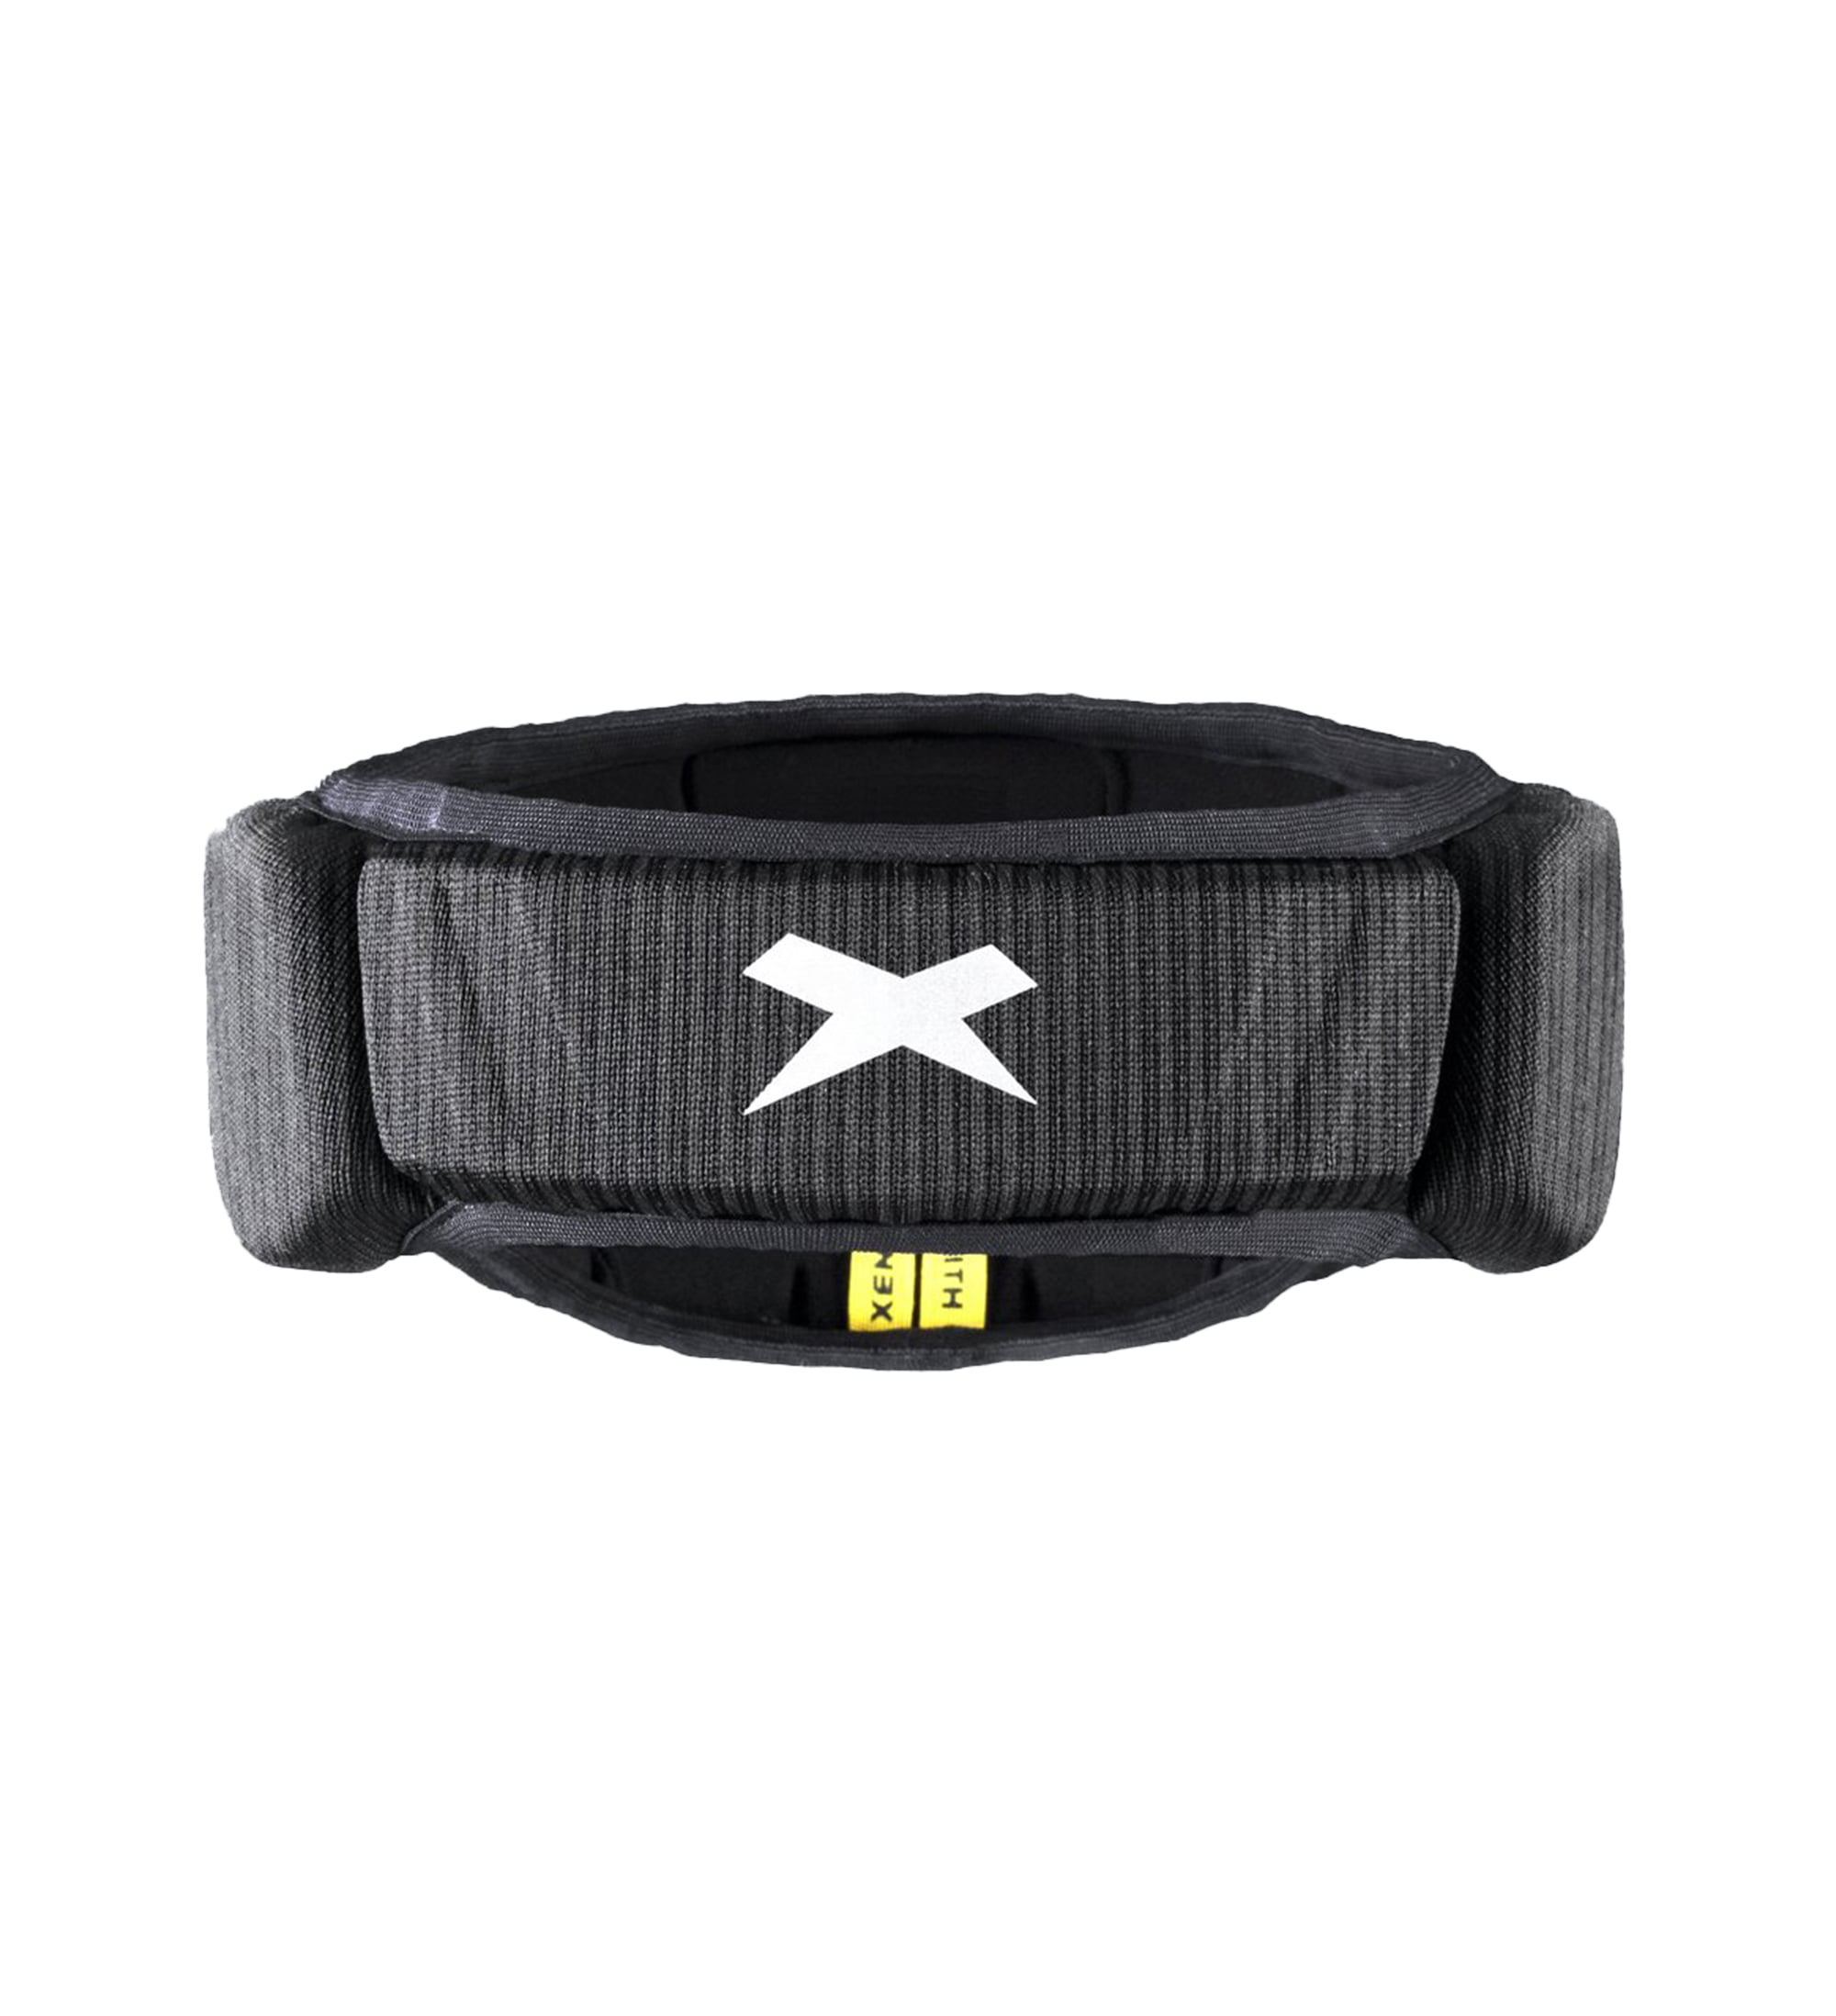 Xenith Loop - Non-Tackle Football Headgear (Black, Medium)